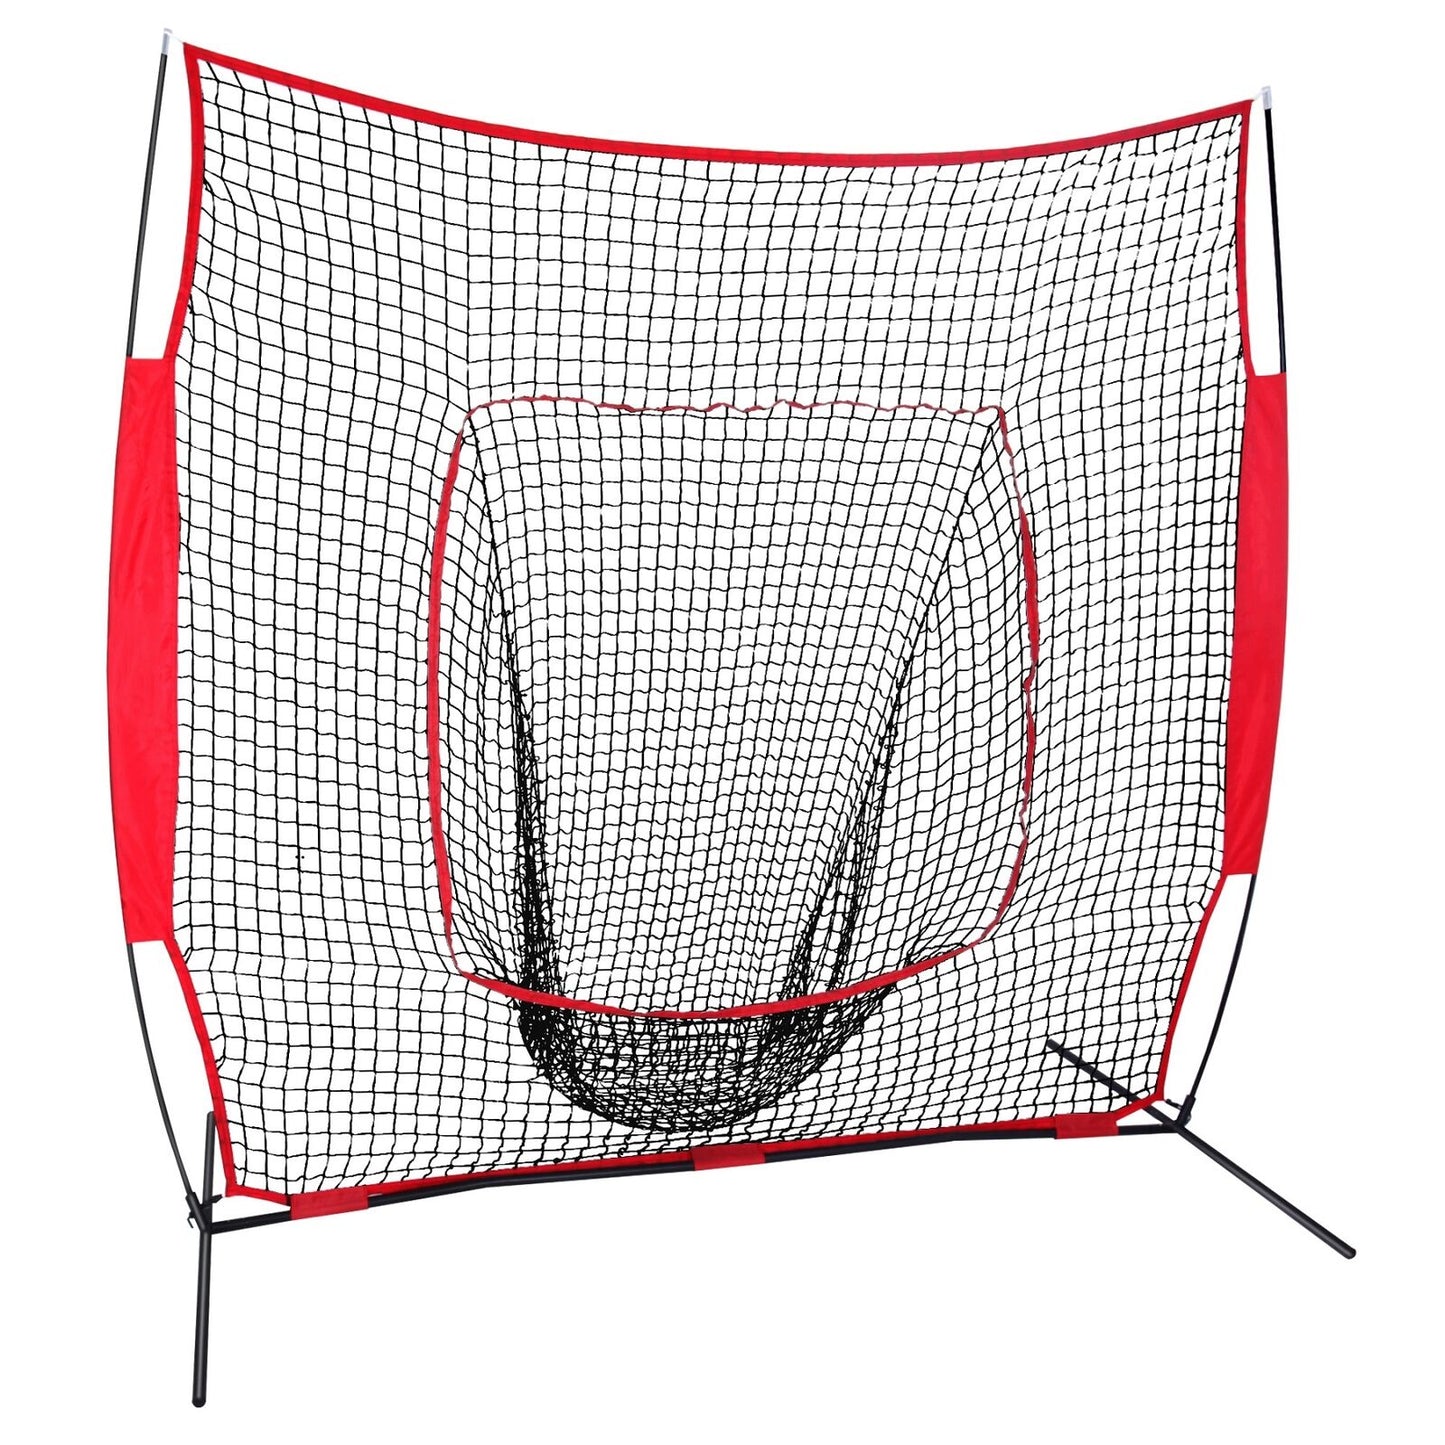 Pro-Style Batting Tee +Baseball Softball 7'×7' Practice Net w/Bag and Bow Frame